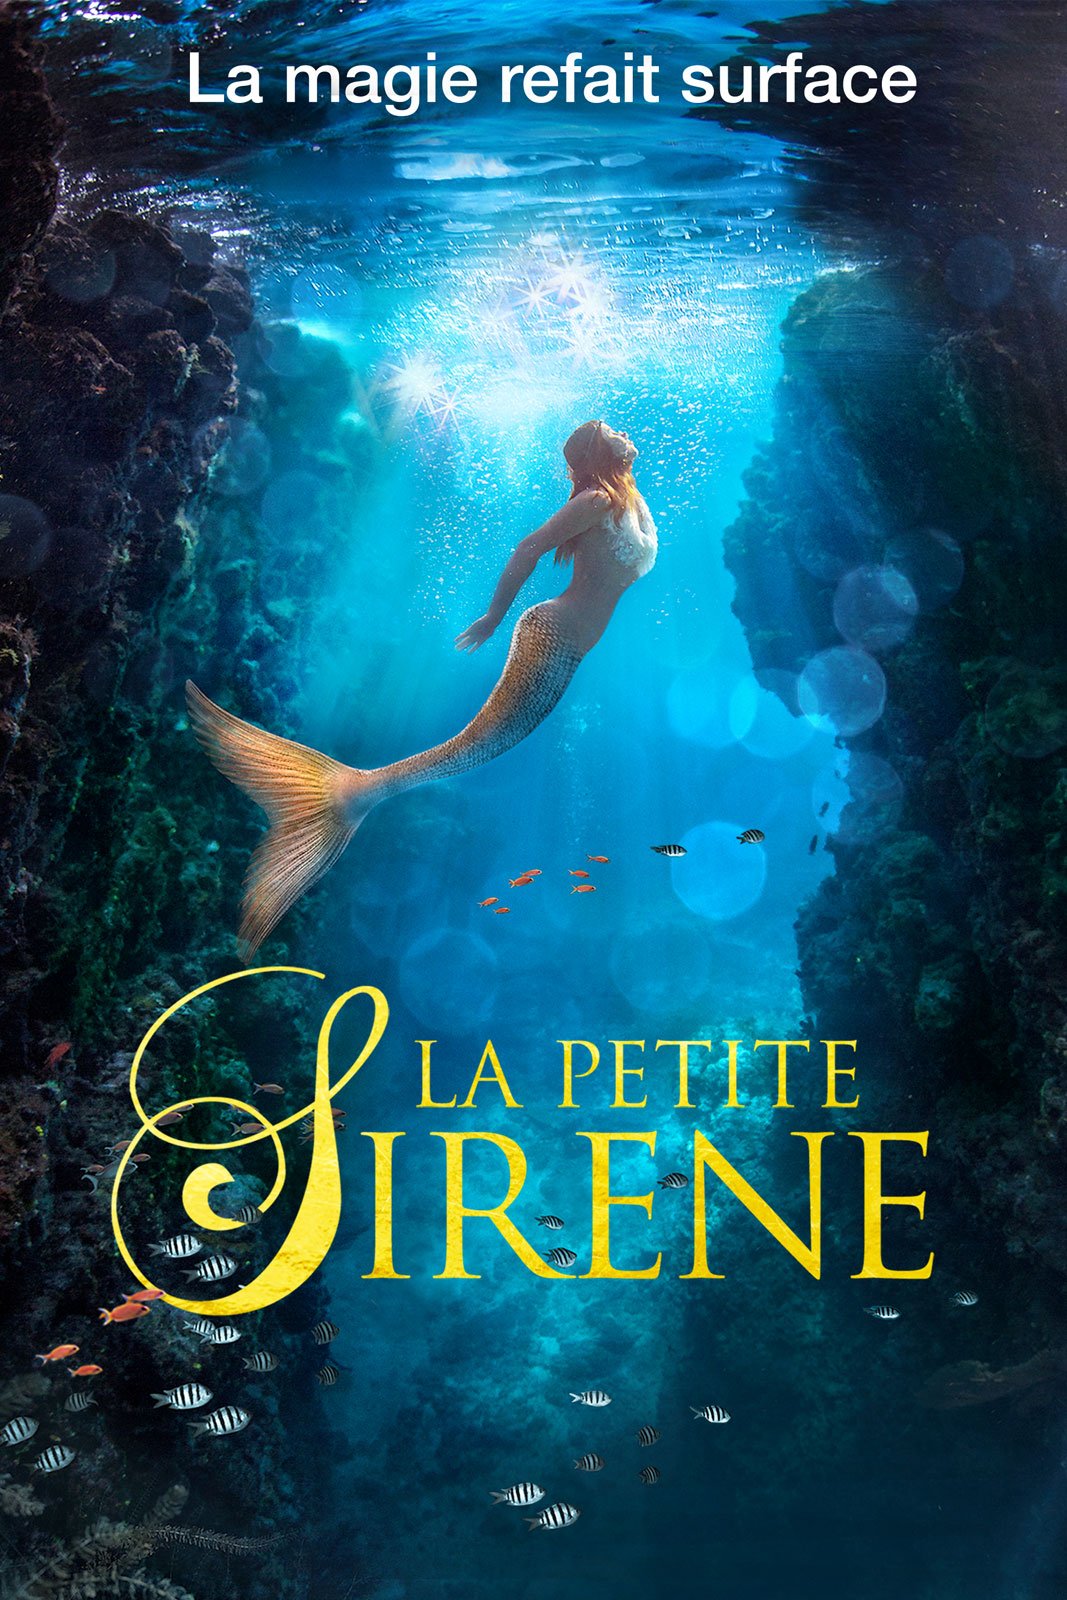 Au Cinéma : La petite sirène, par Guilhem de Tarlé - LAFAUTEAROUSSEAU